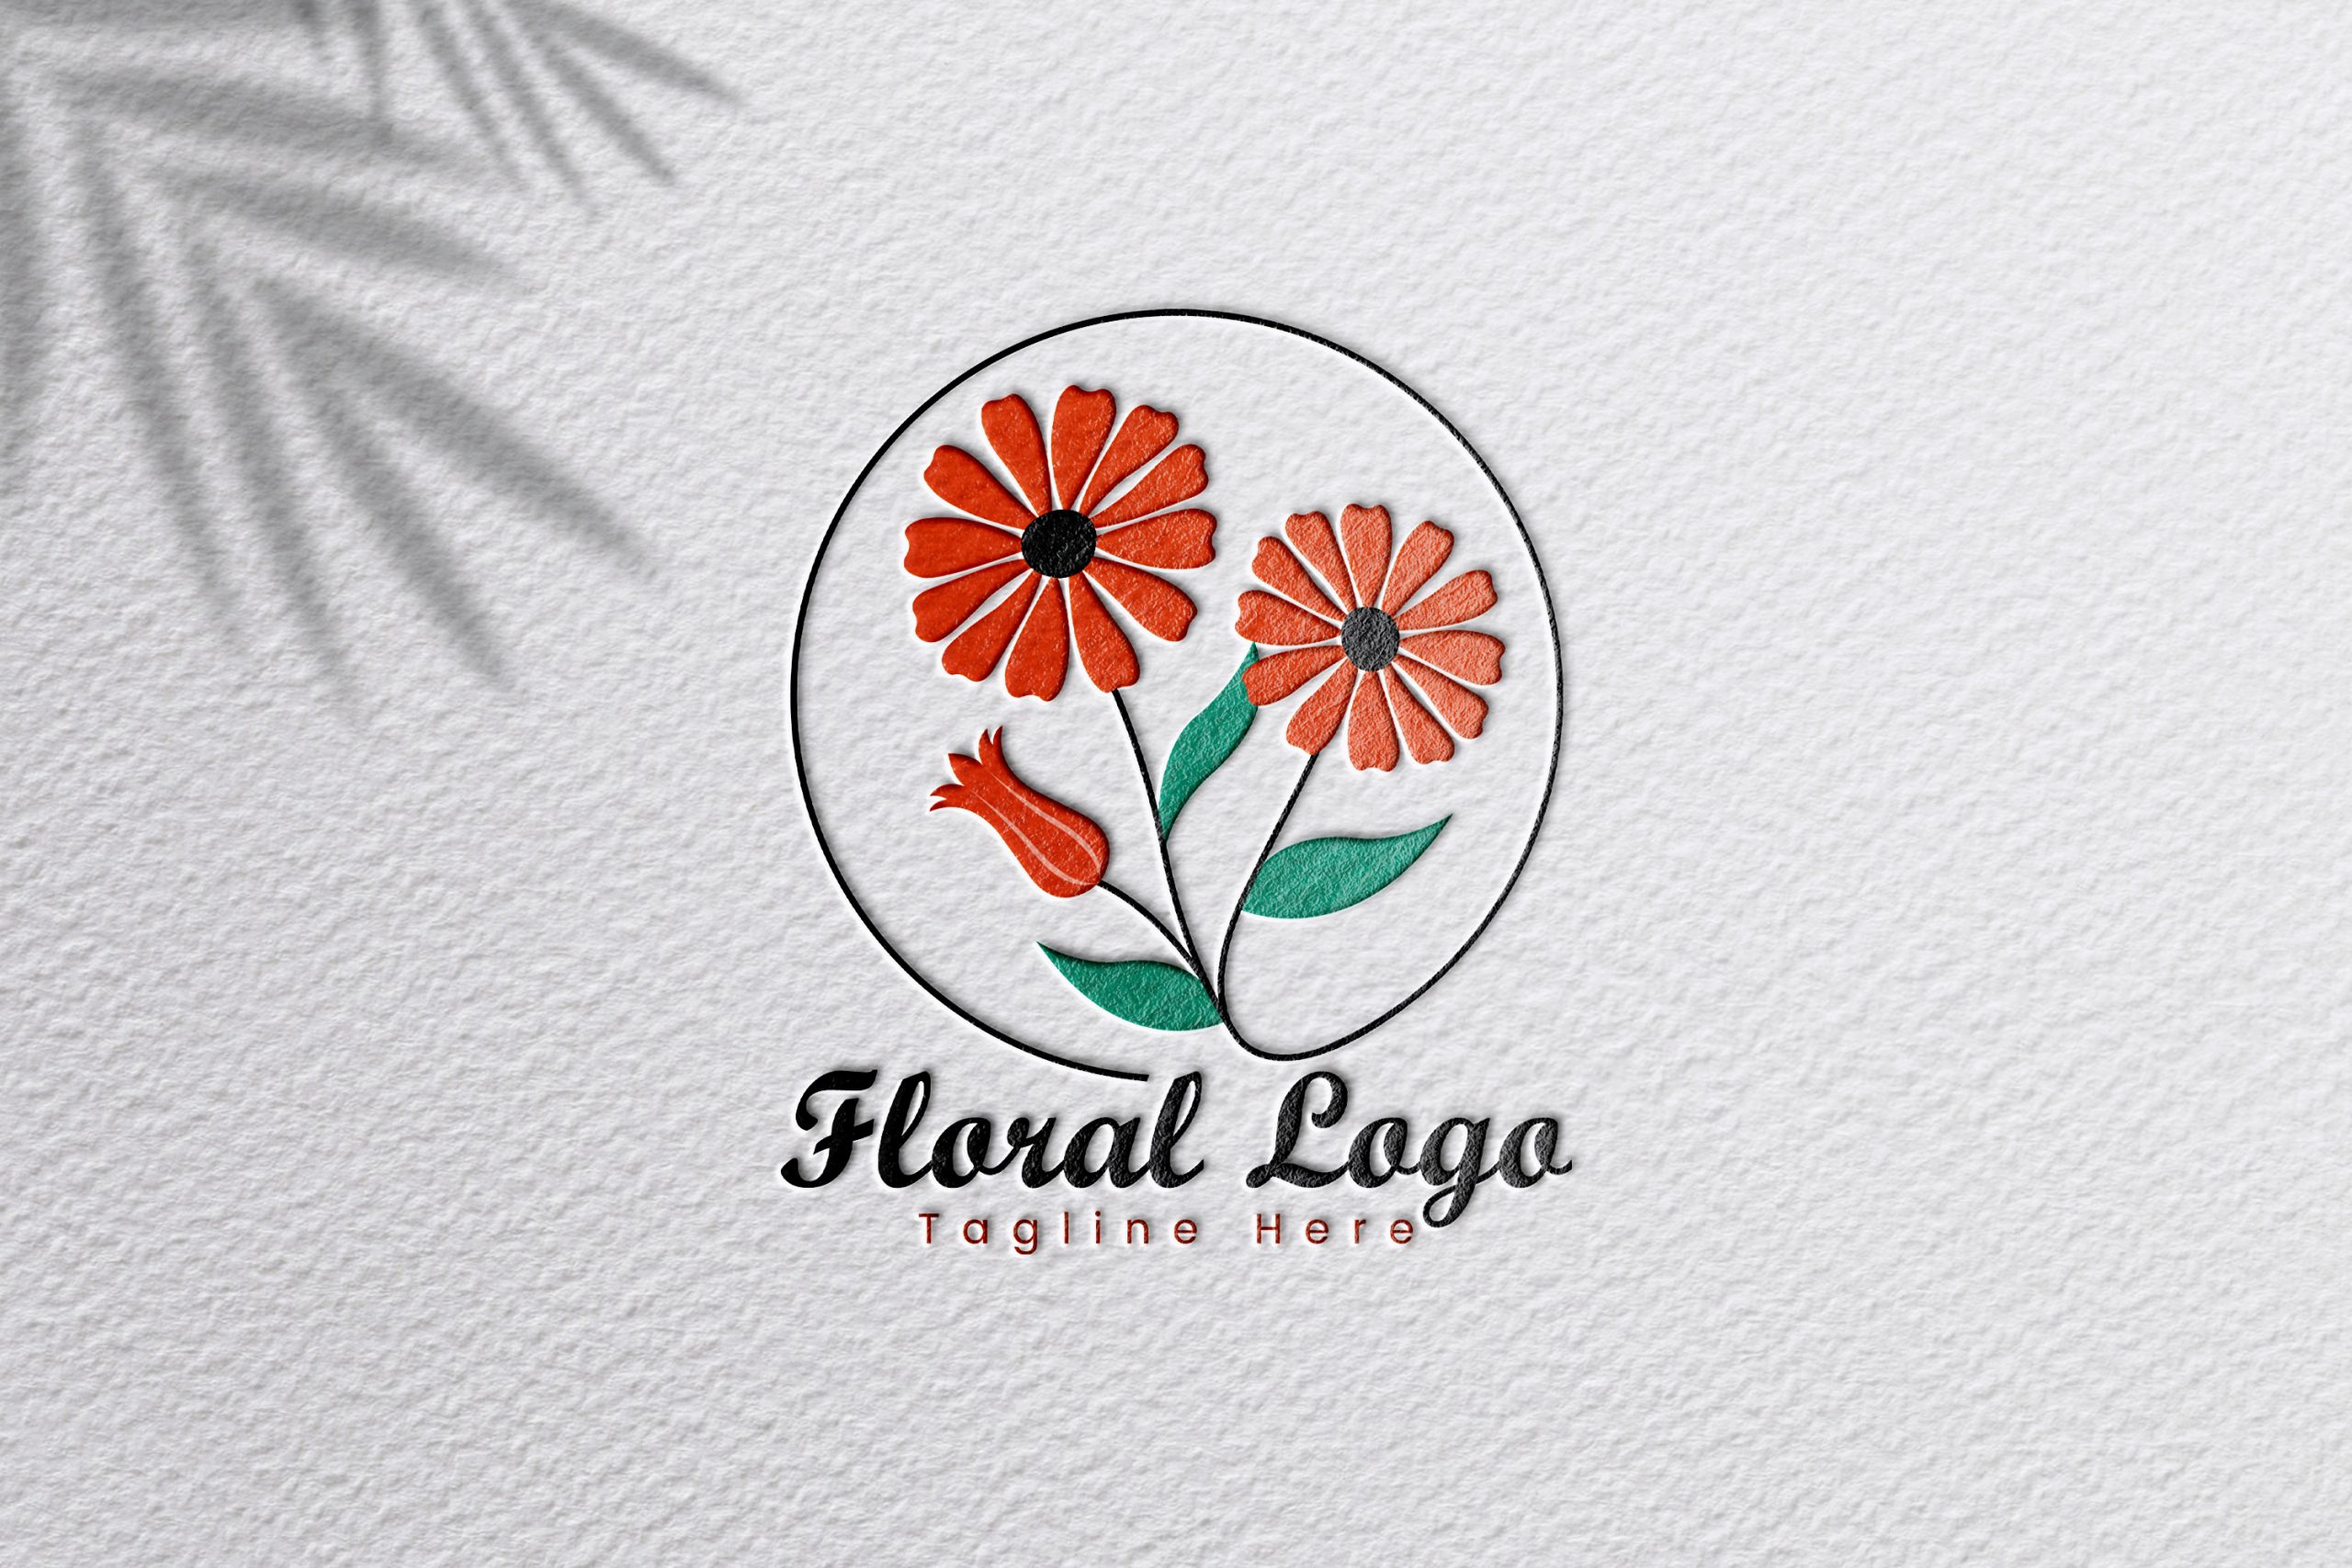 logo with flower design